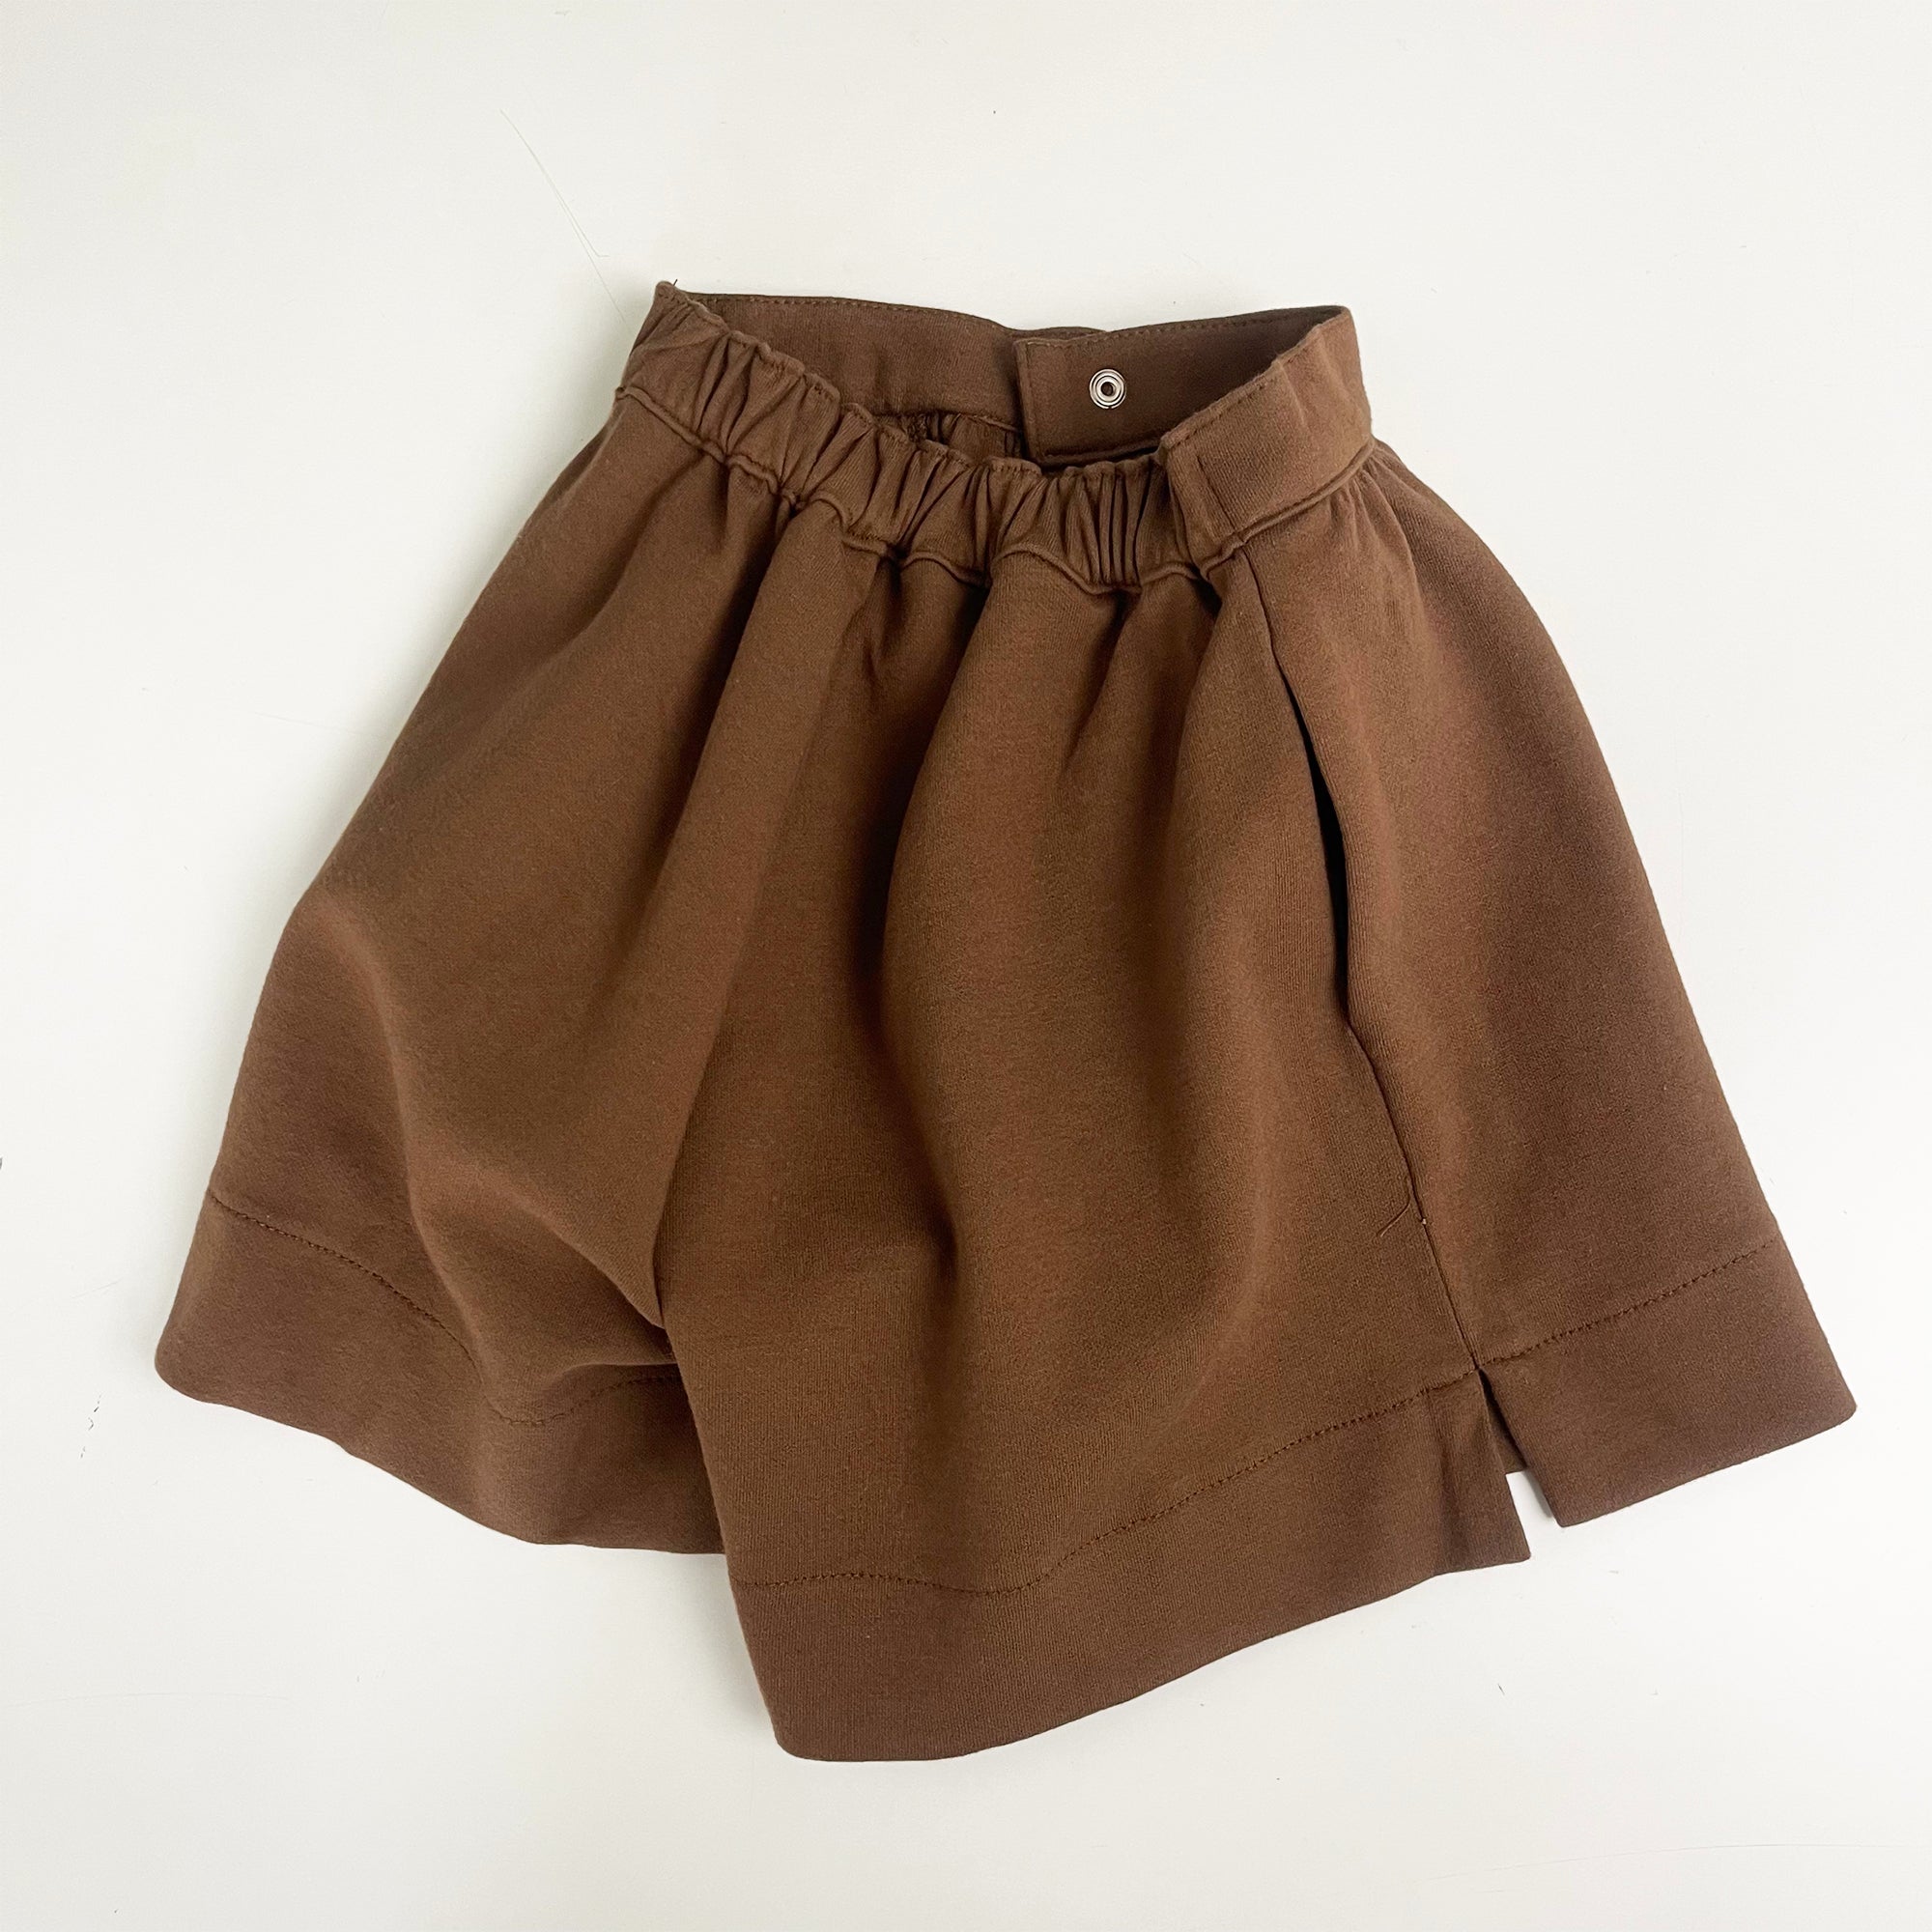 Boys & Girls Brown Shorts